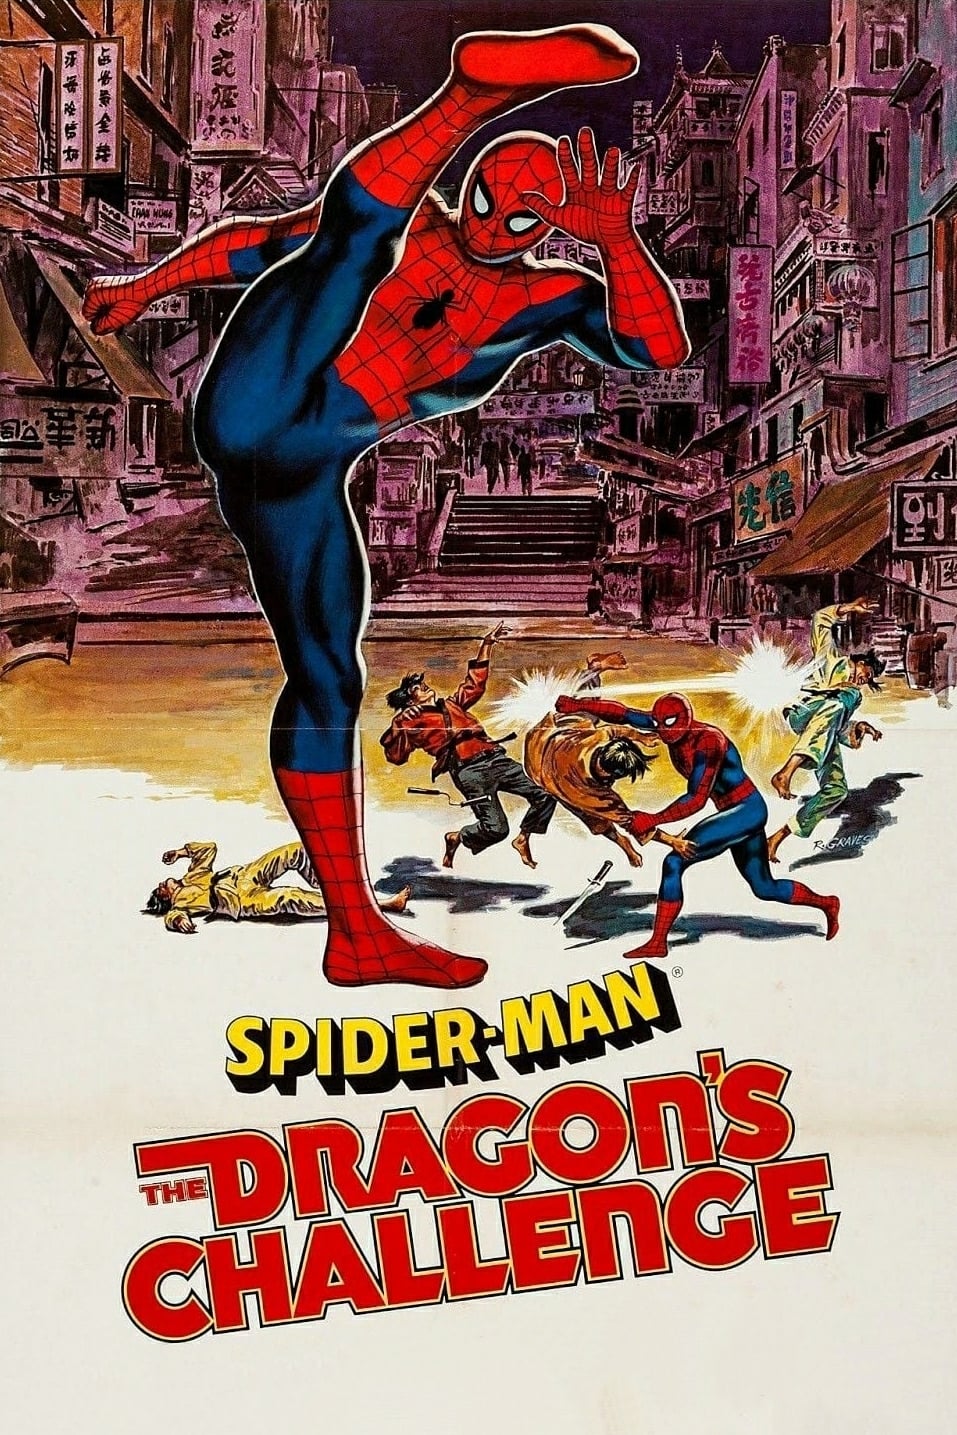 Spider-Man: The Dragon's Challenge (1981)